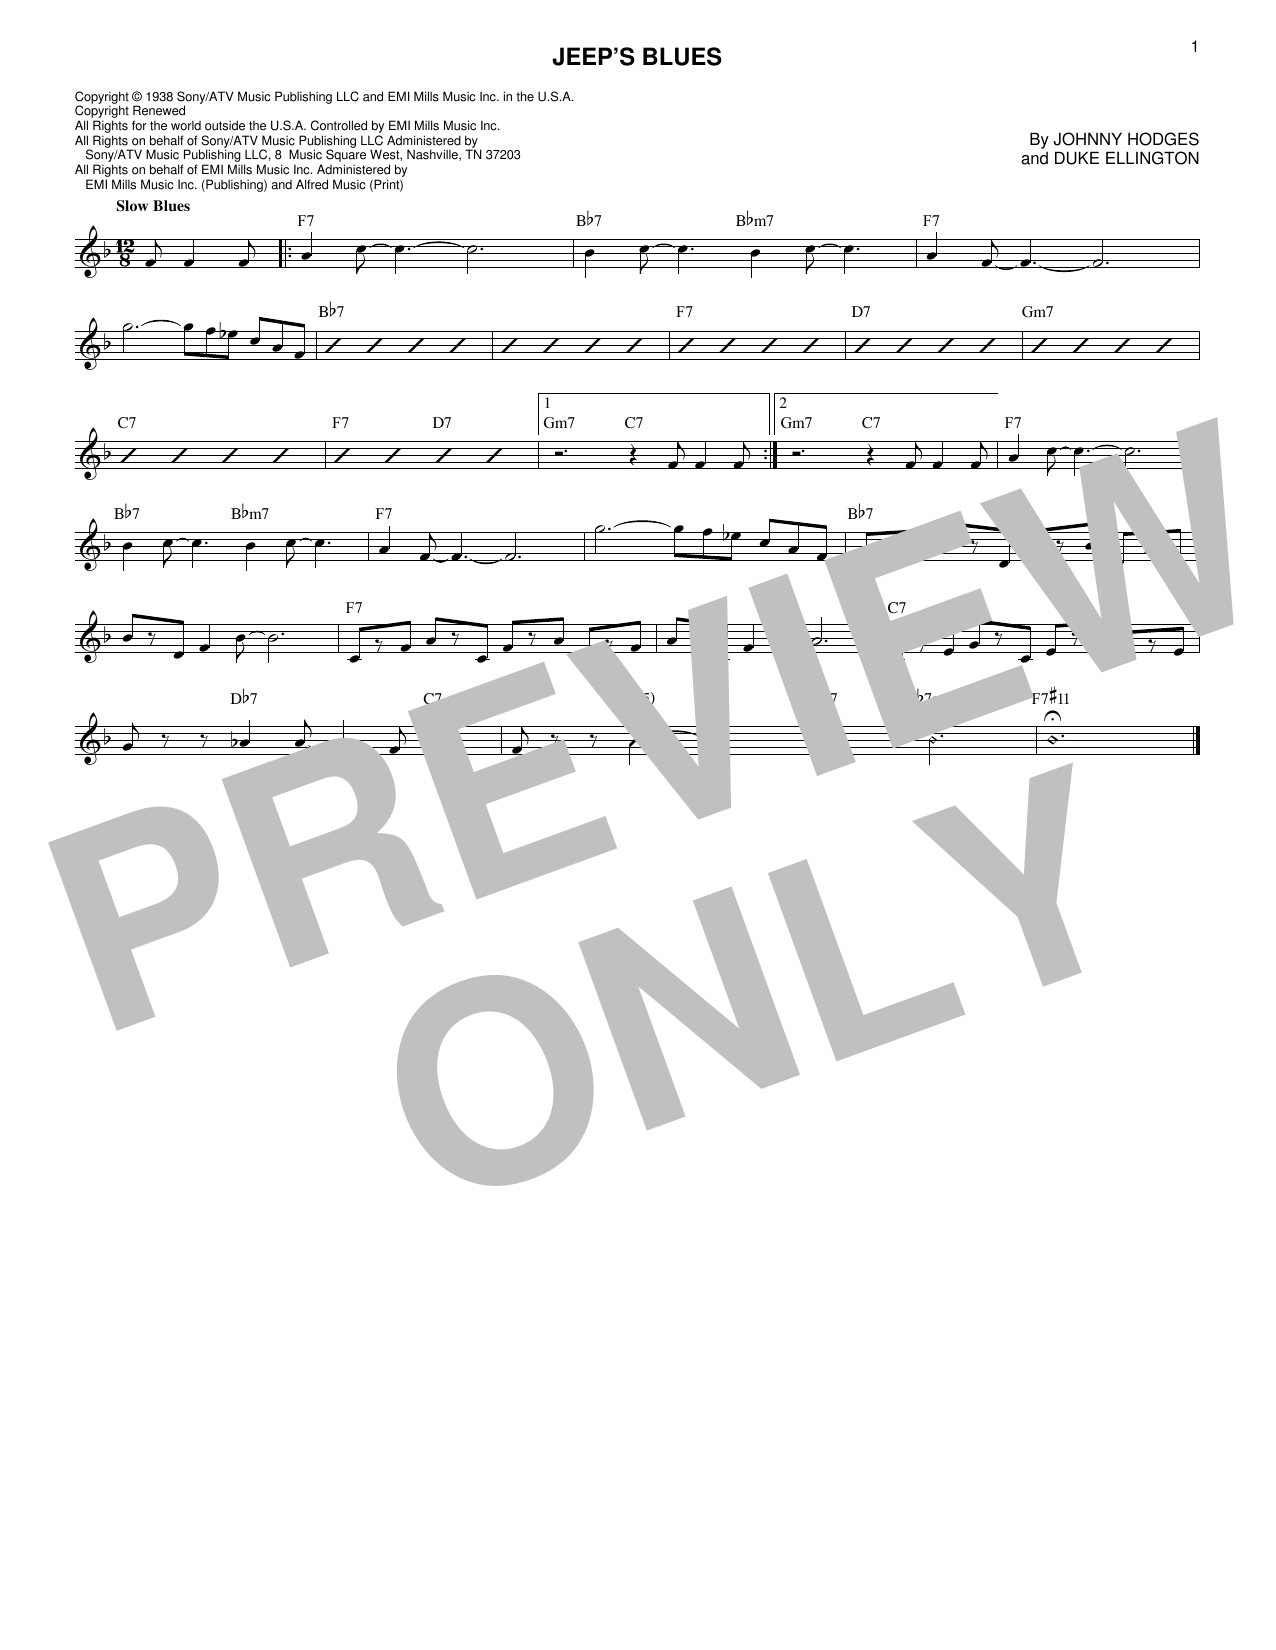 Duke Ellington Jeep's Blues Sheet Music Notes & Chords for Melody Line, Lyrics & Chords - Download or Print PDF